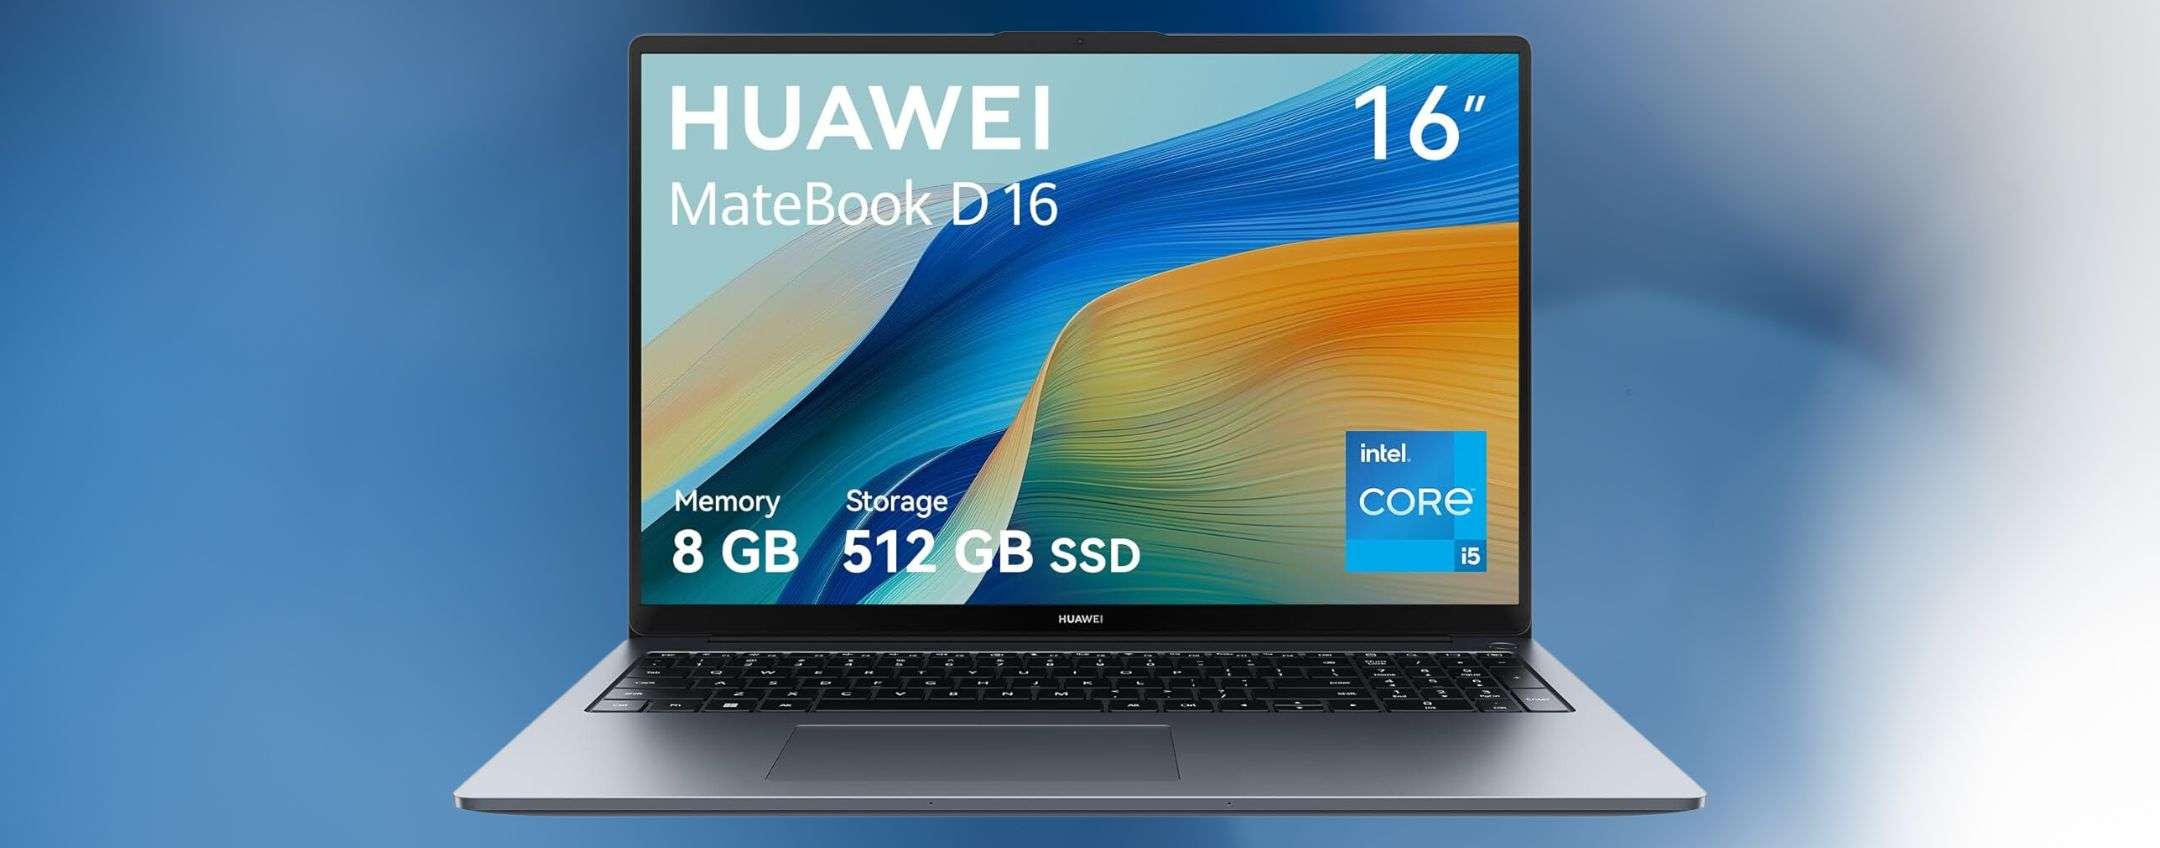 Huawei MateBook D 16 offerta Amazon